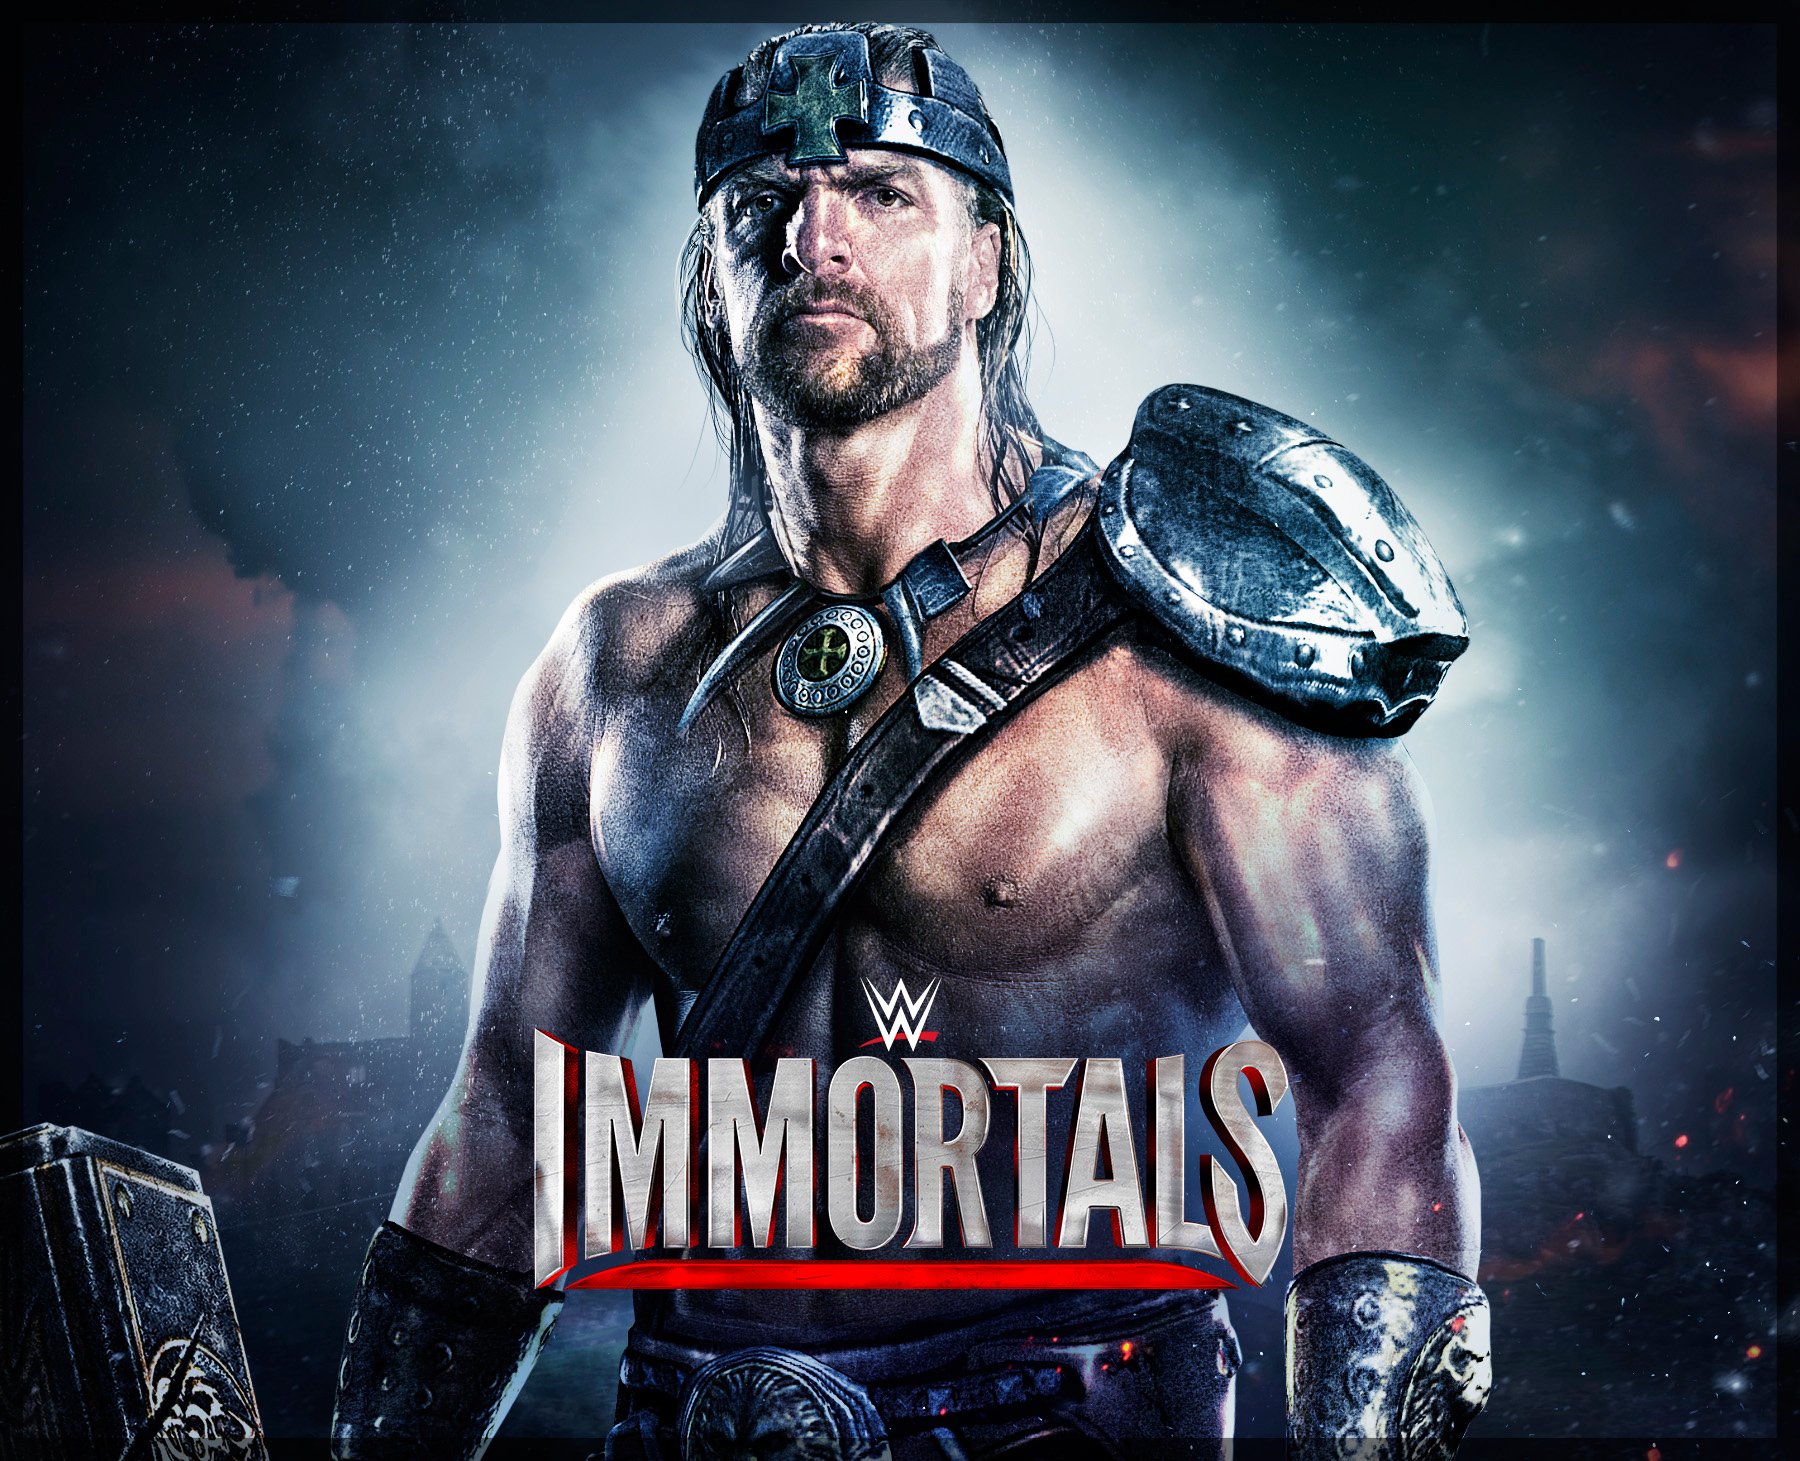 watch immortals full movie free online